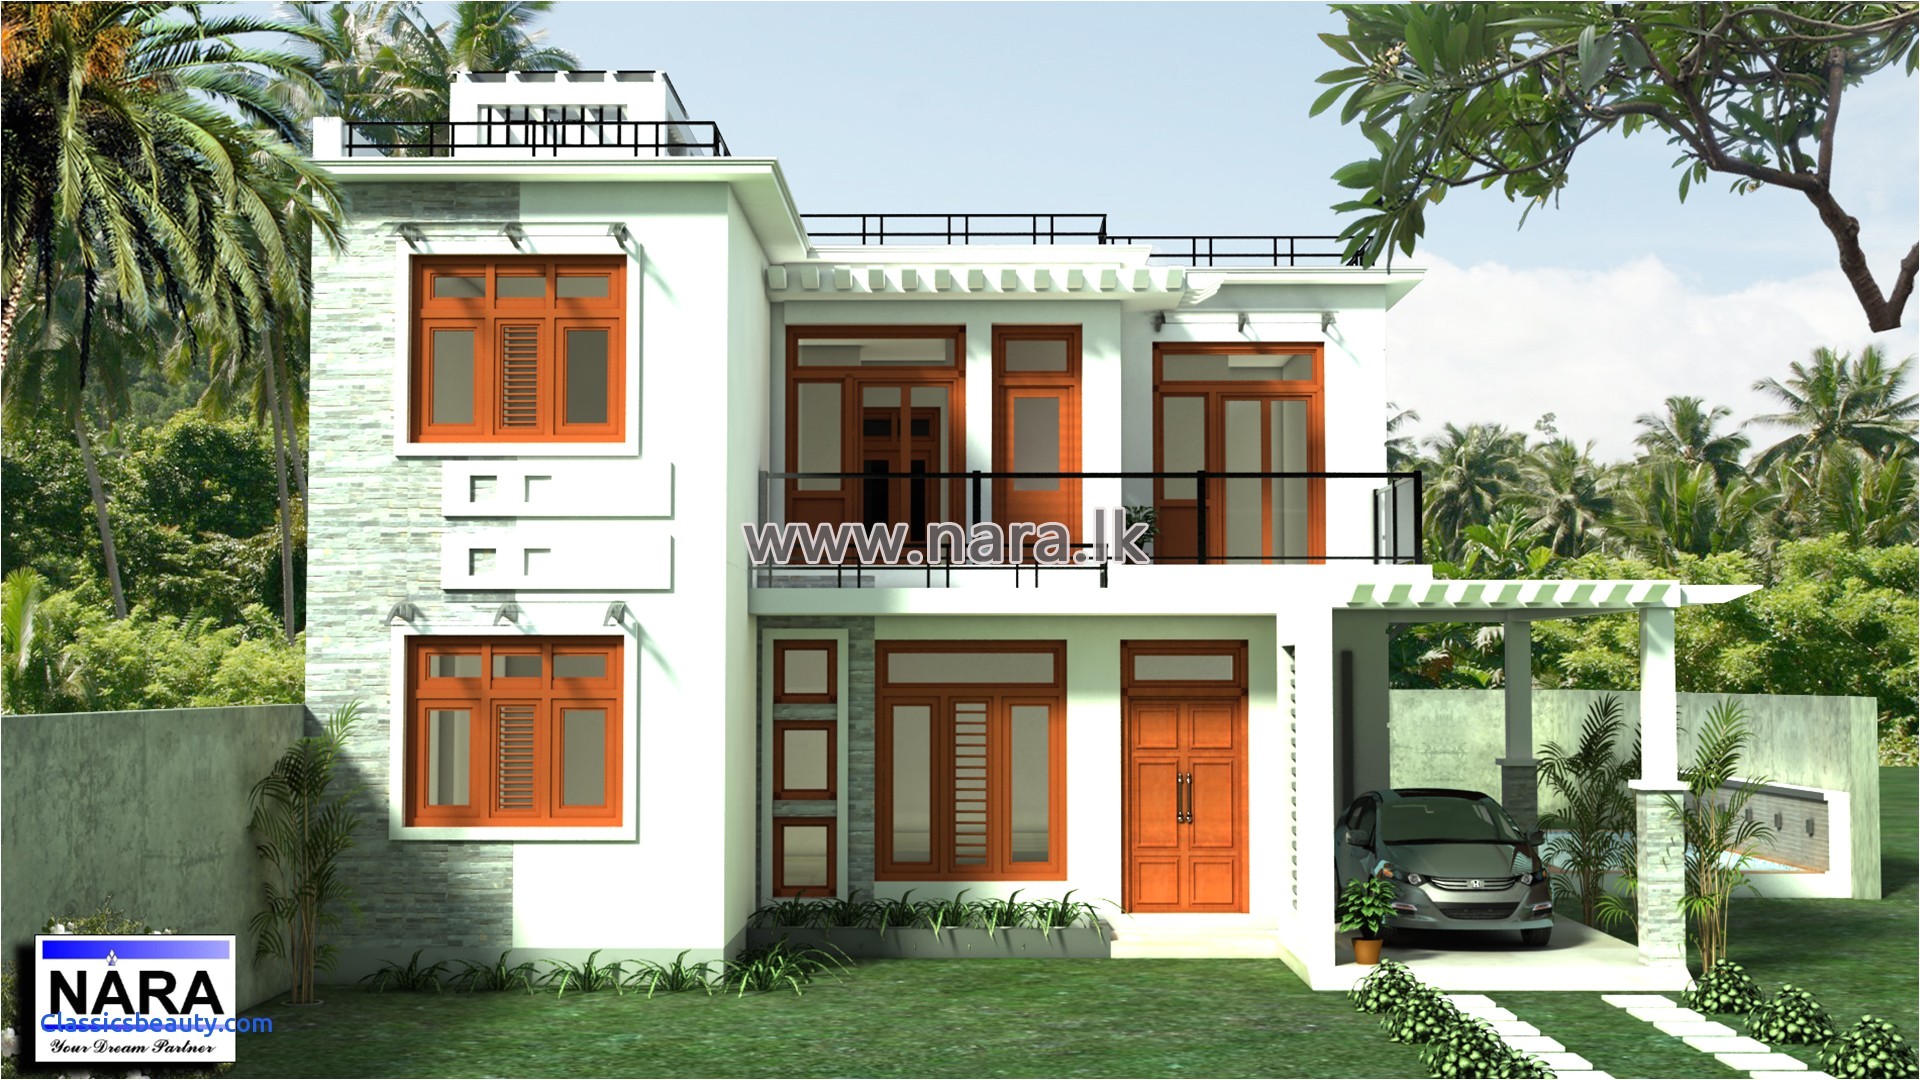 new home plans unique modern house plans designs in sri lanka youtube plan design